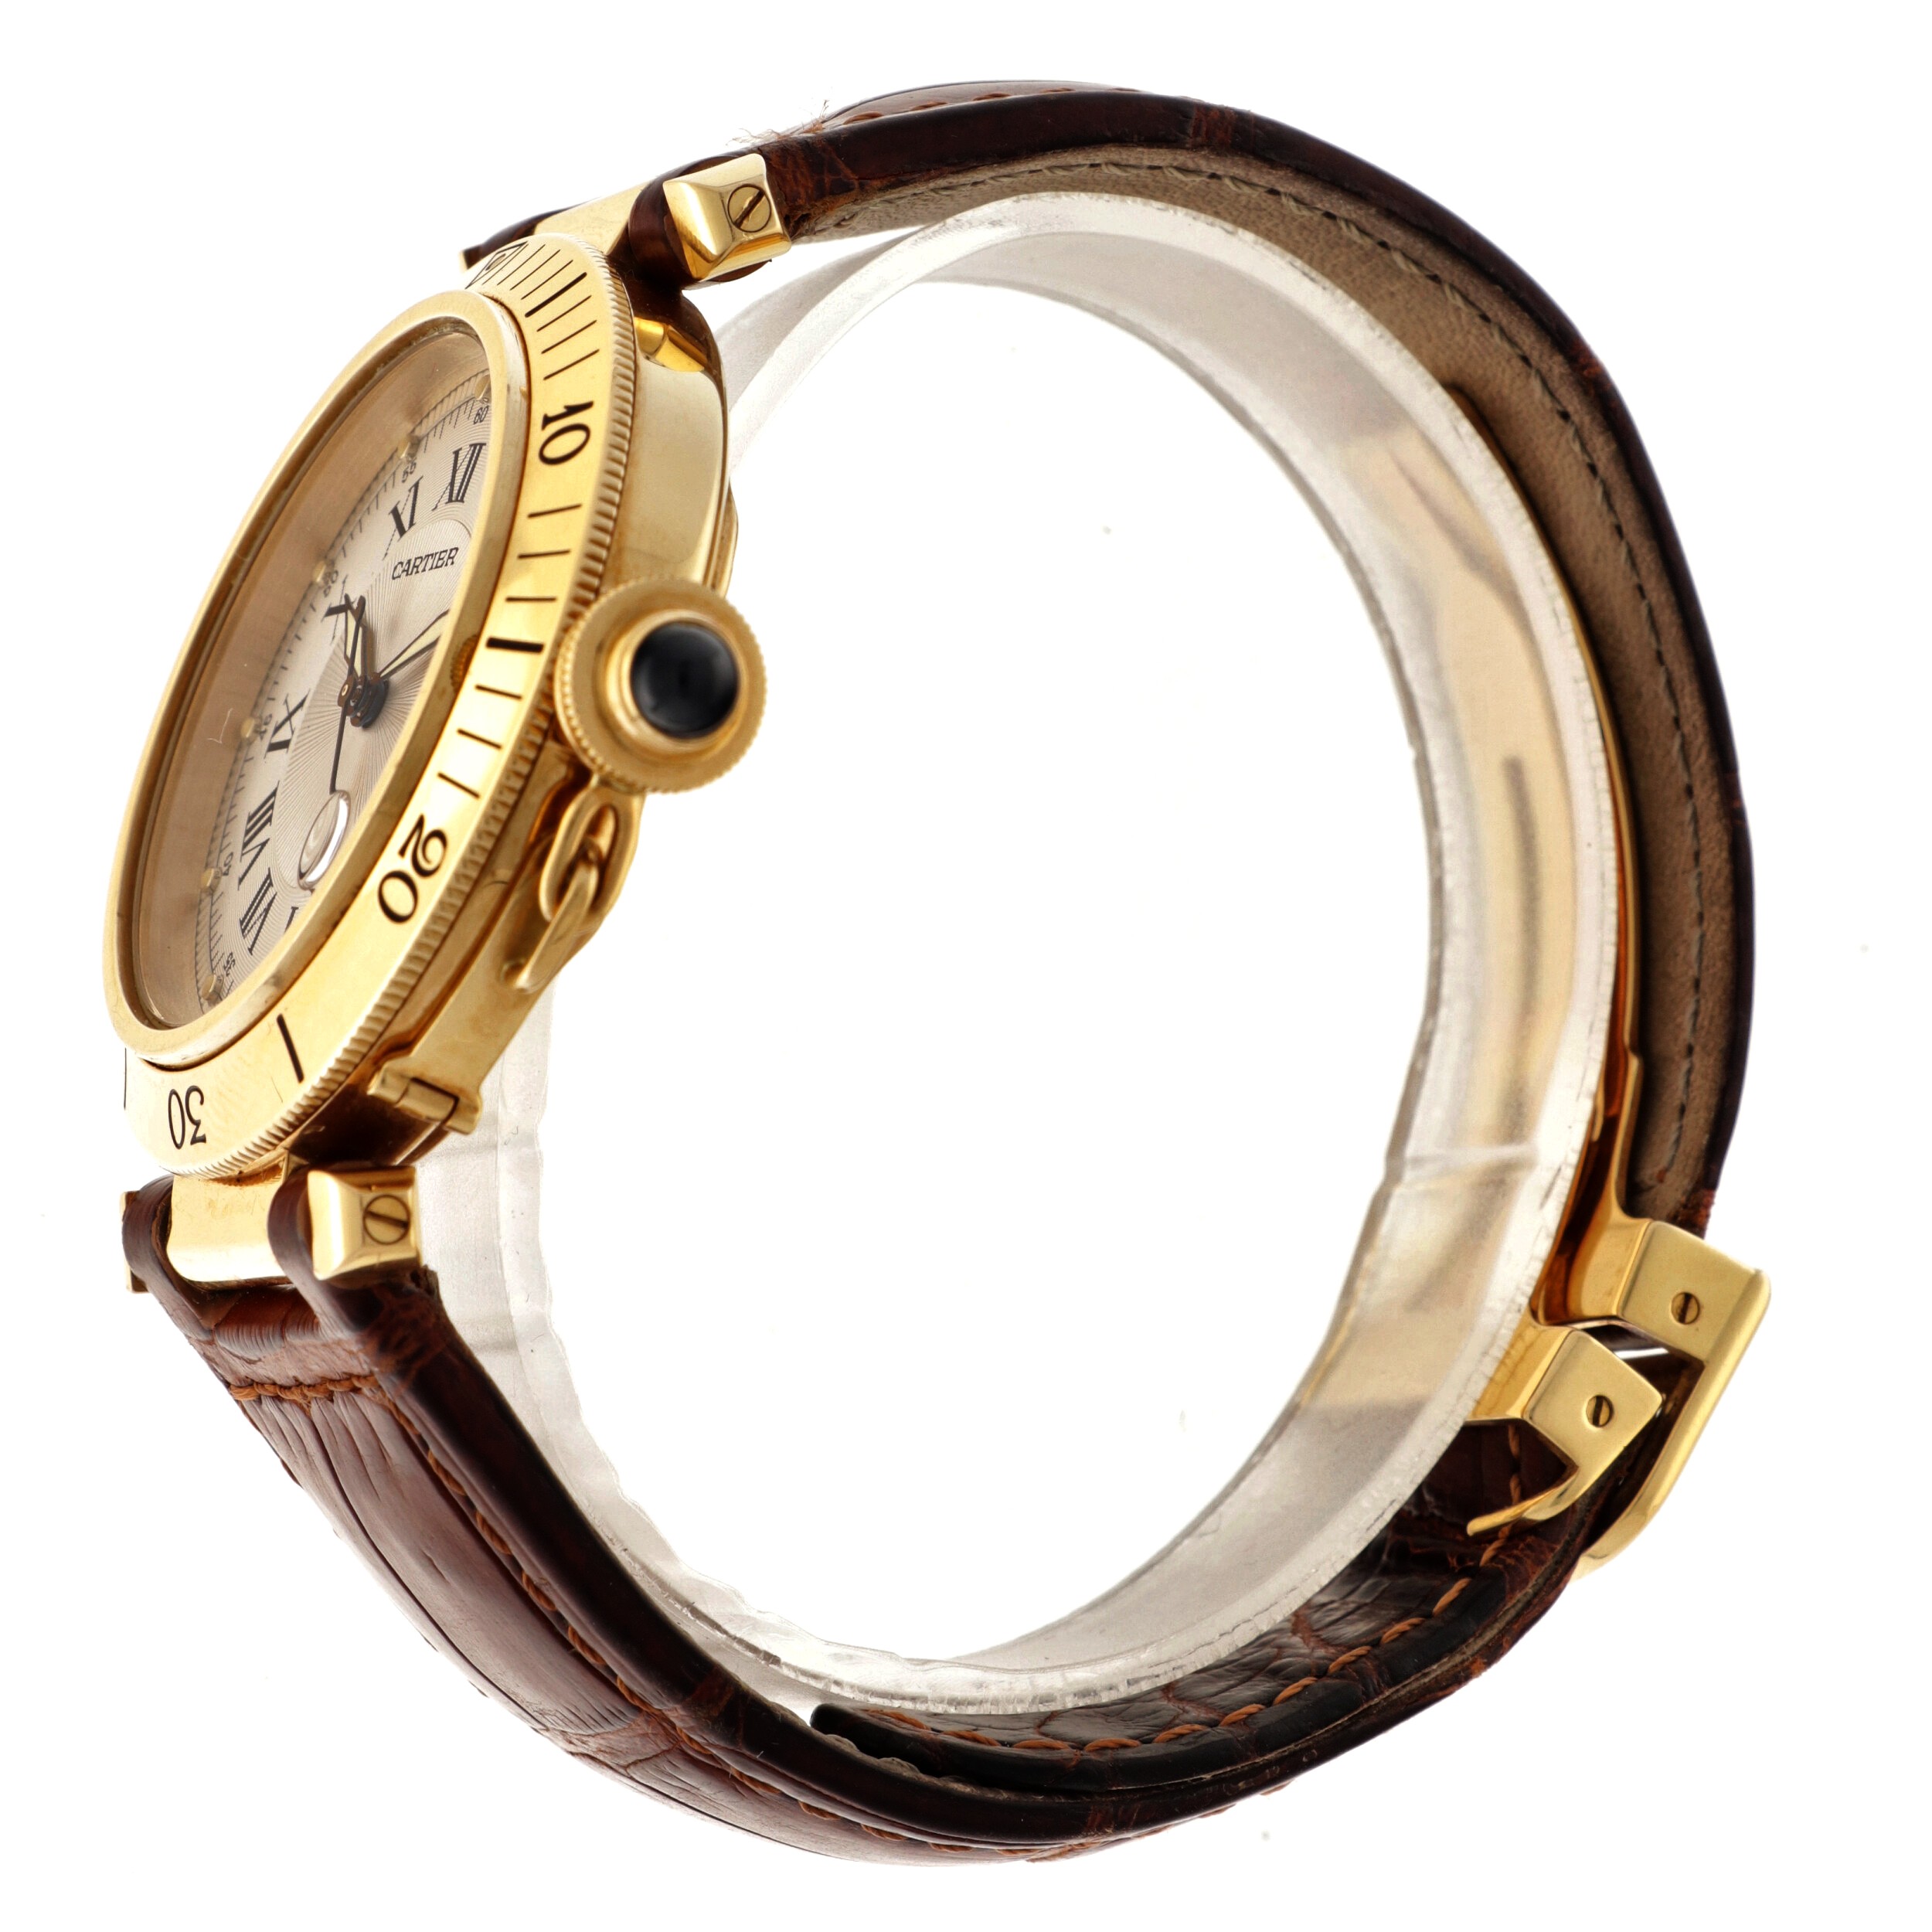 No Reserve - Cartier Pasha 18K. 1027 - Men's watch. - Image 5 of 6